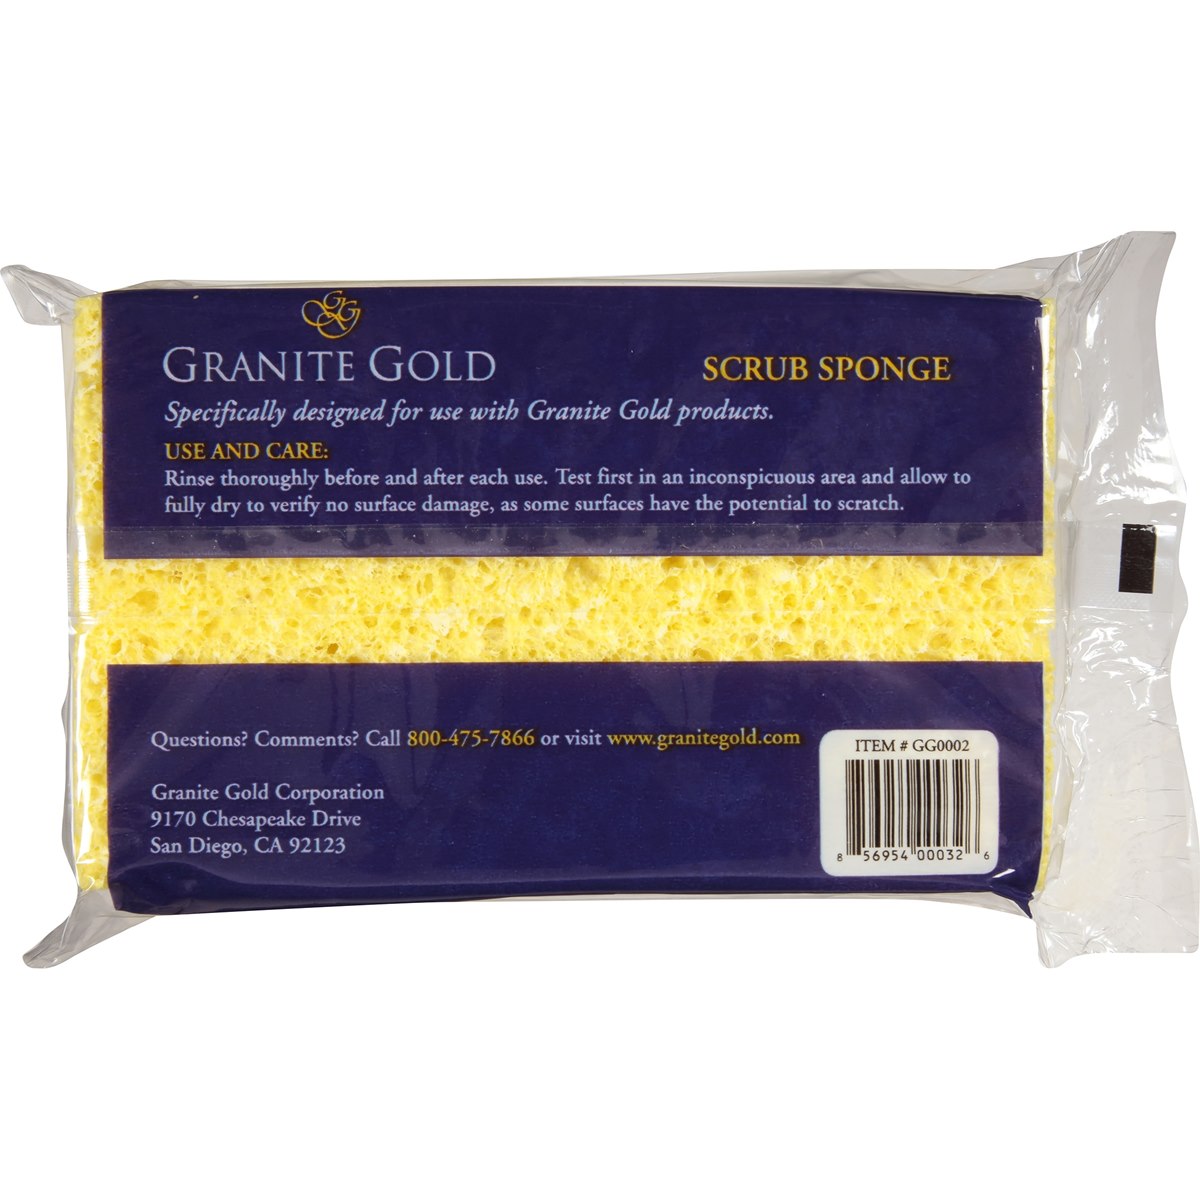 How to use the Granite Gold Scrub Sponge